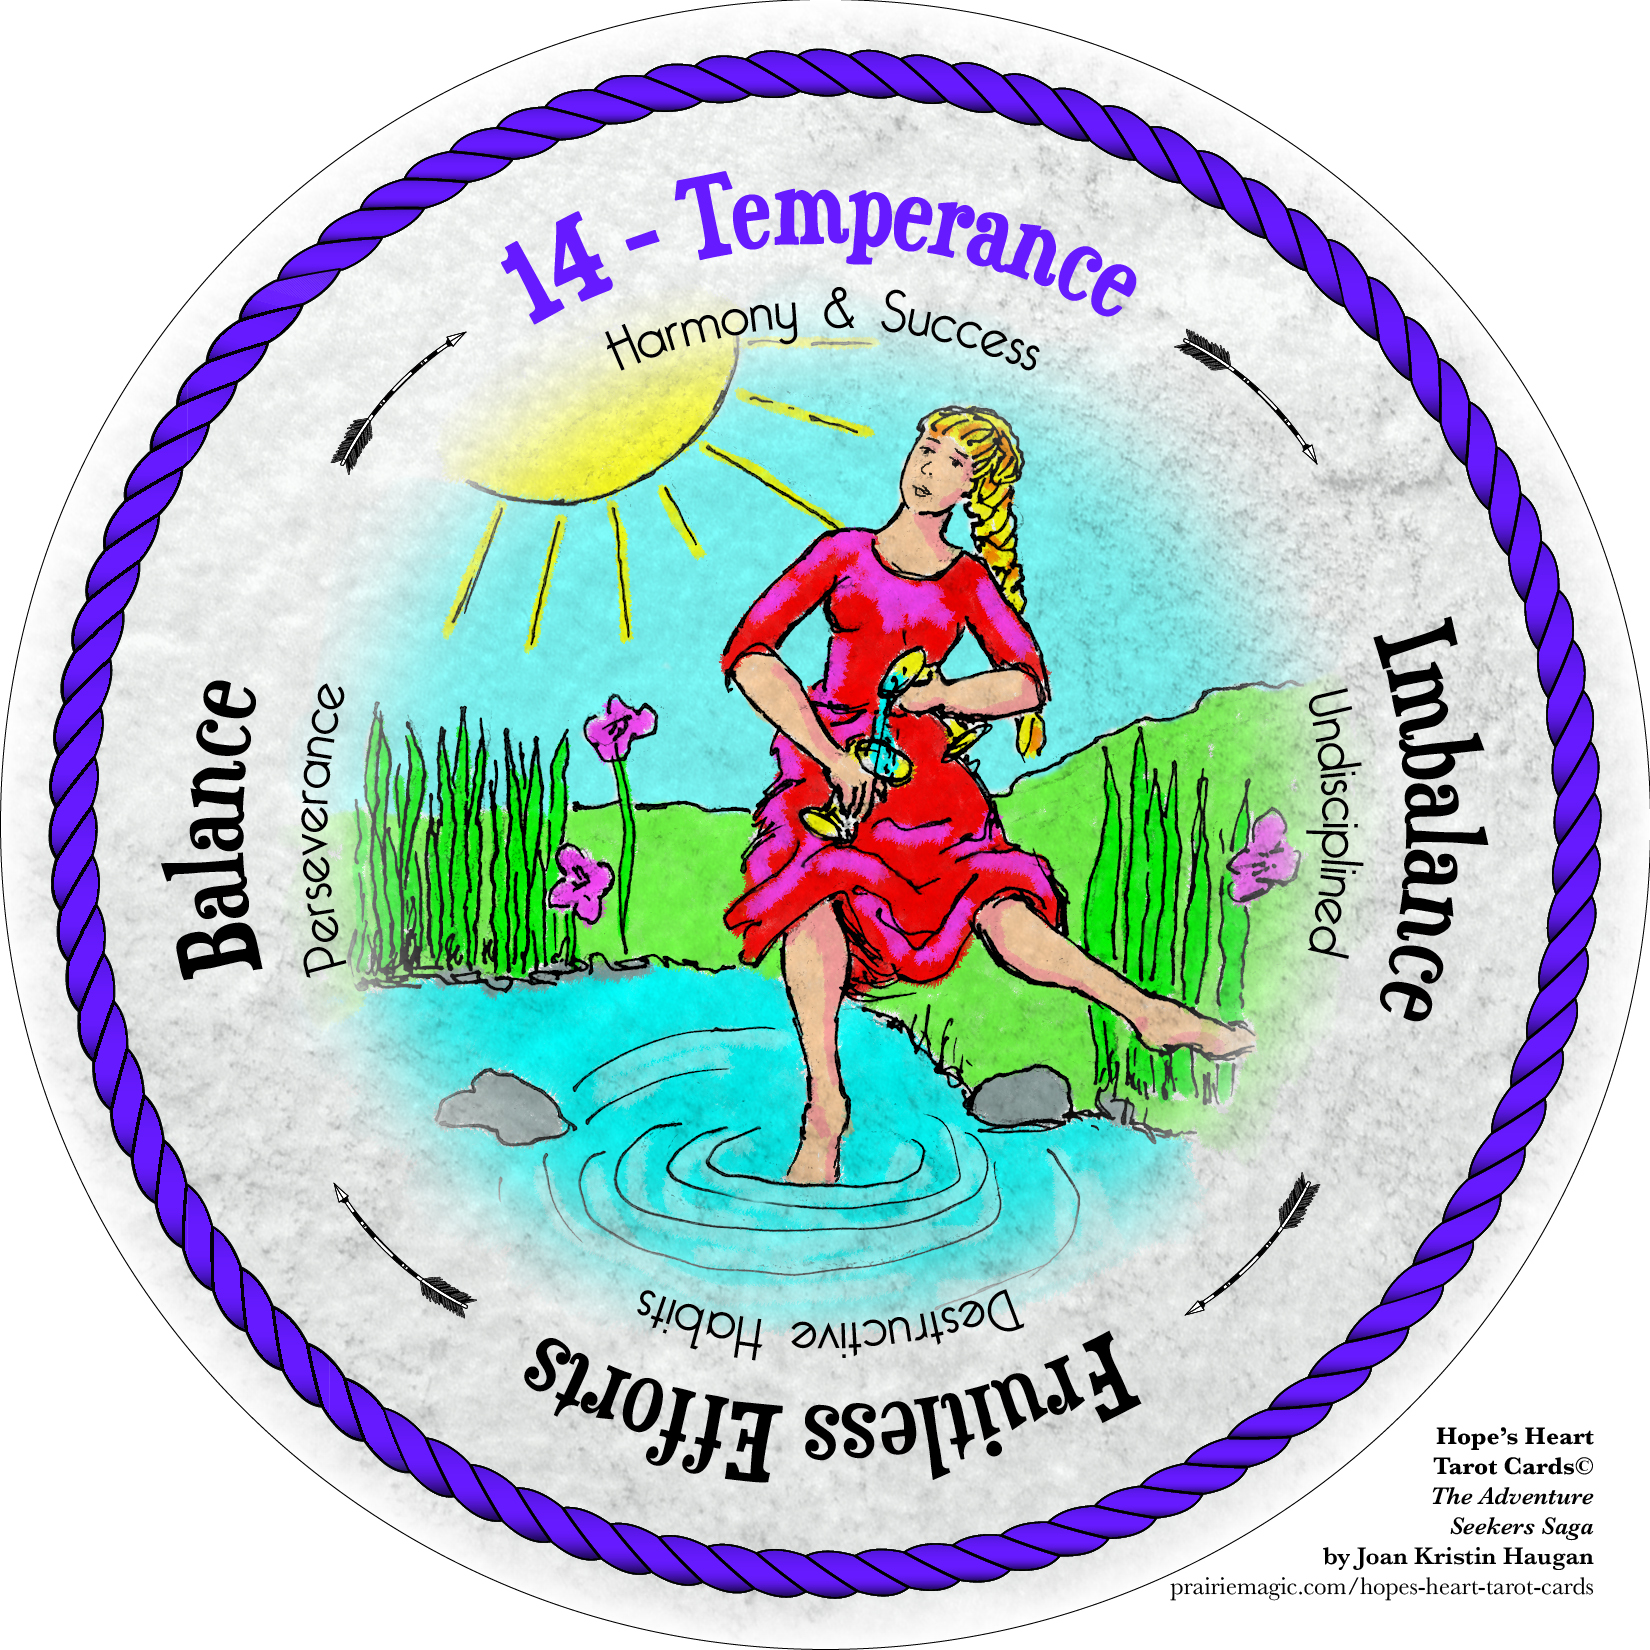 14-temperance-hope-s-heart-tarot-cards-.jpg